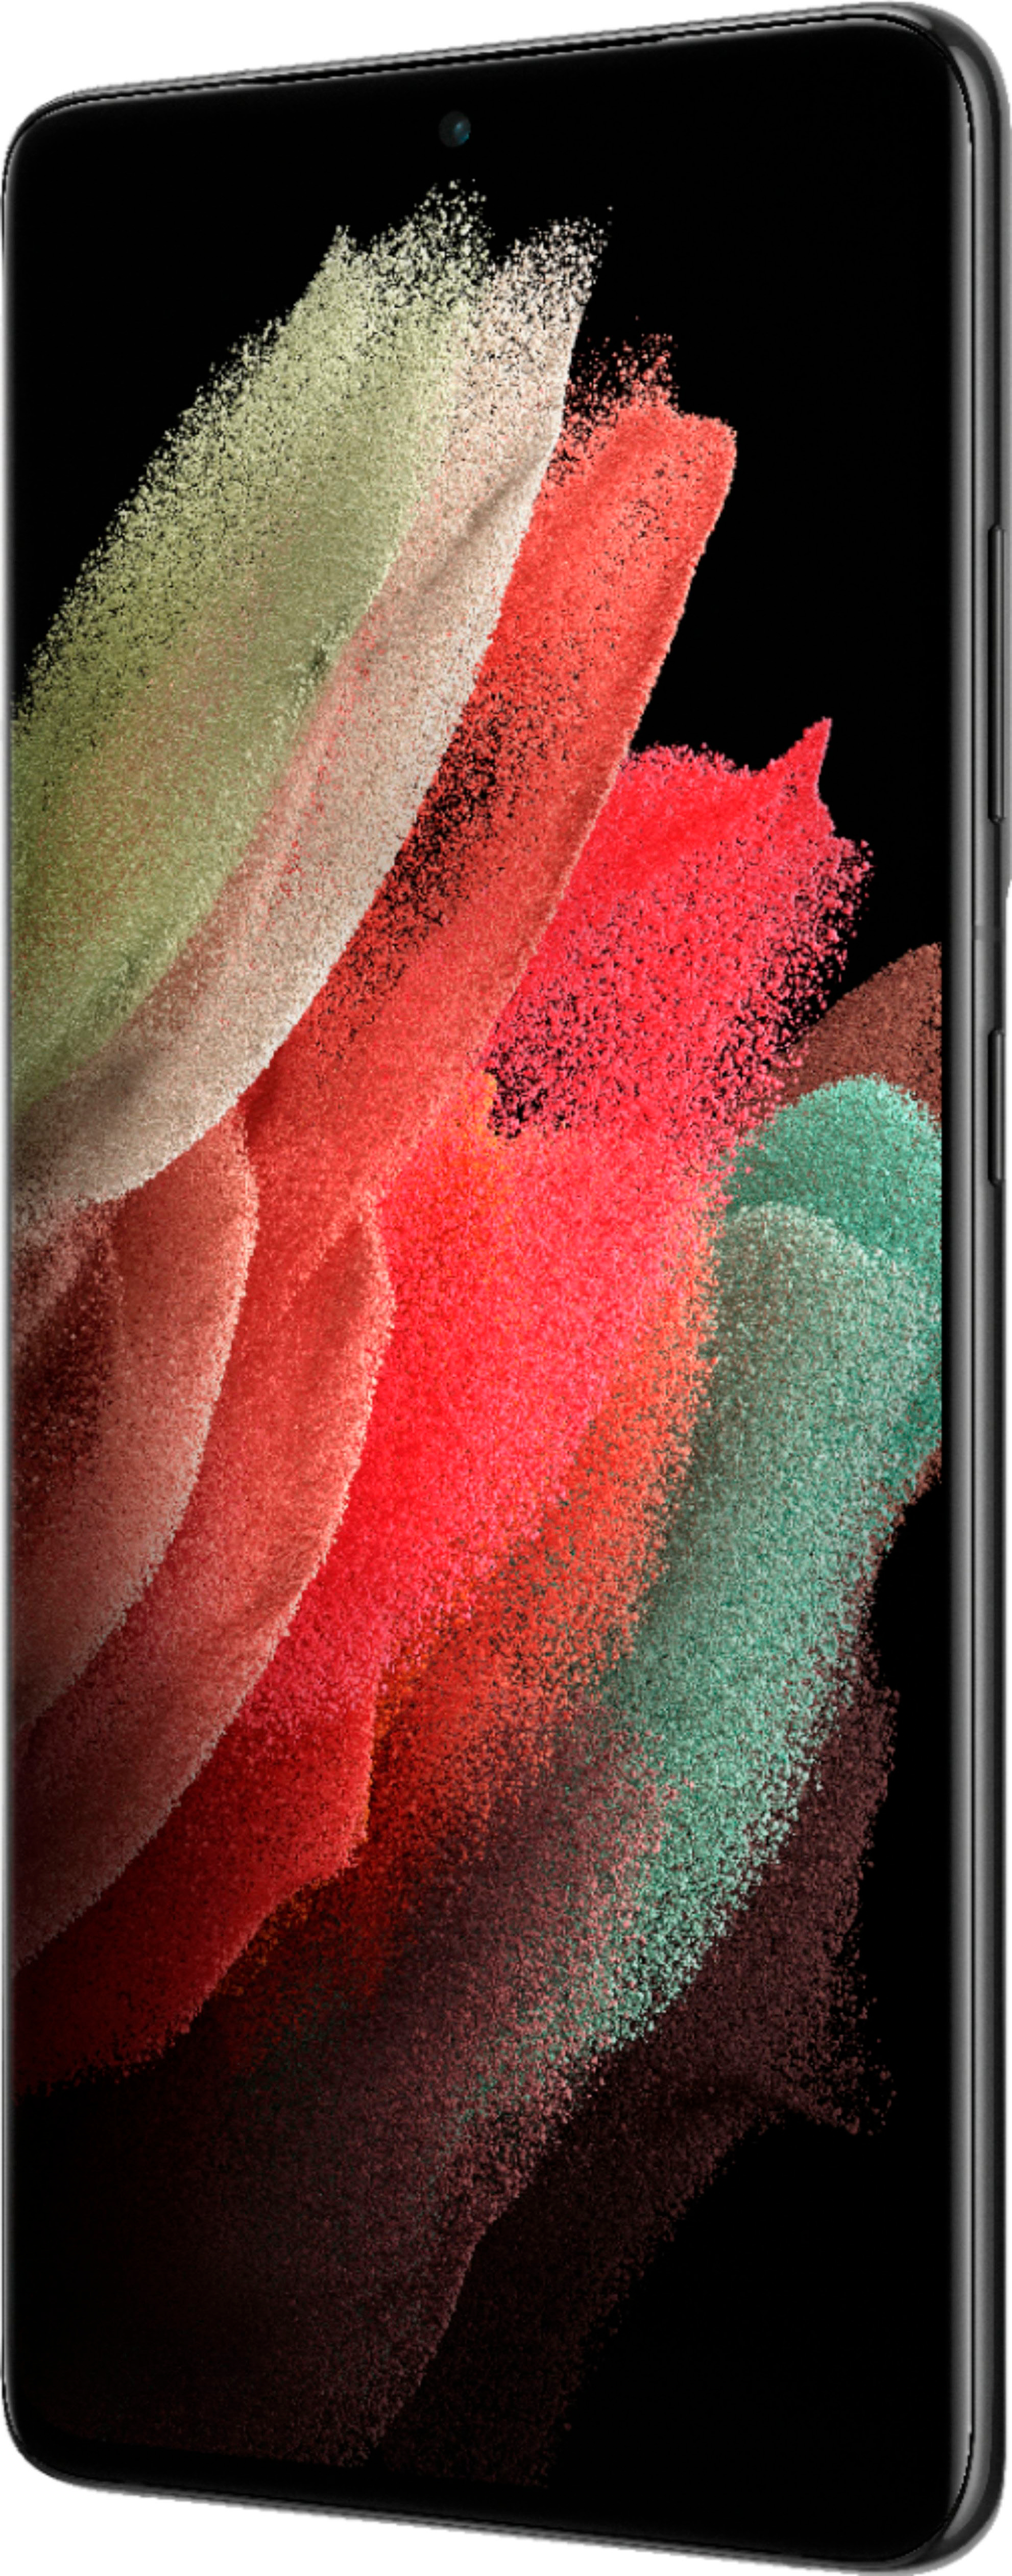  Samsung Galaxy S21 Ultra 5G, US Version, 256GB, Phantom Black -  Unlocked (Renewed) : Cell Phones & Accessories